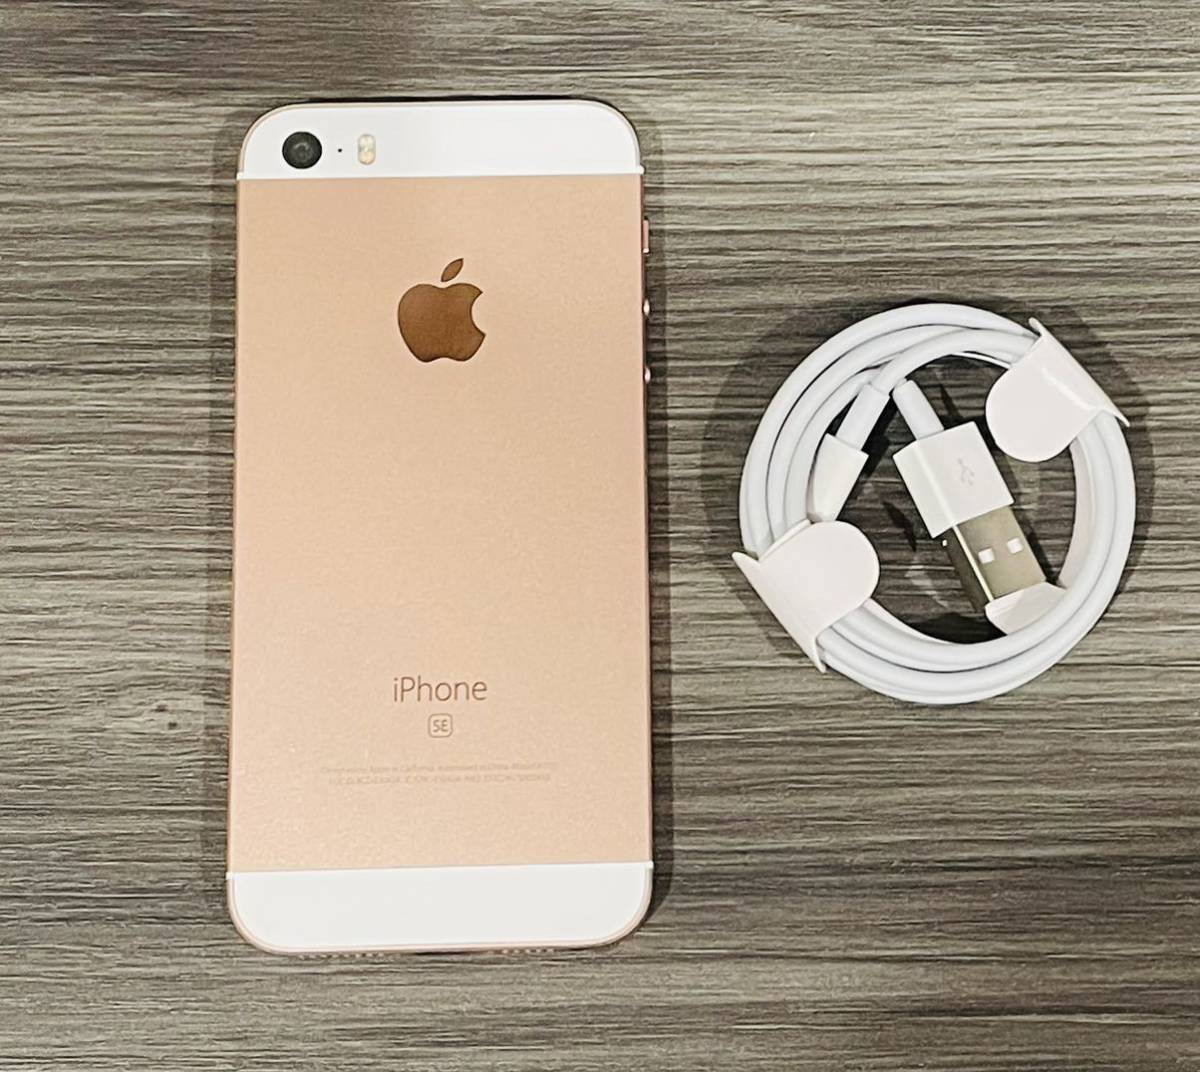 iPhone SE Rose Gold 16 GB SIMフリー - 携帯電話